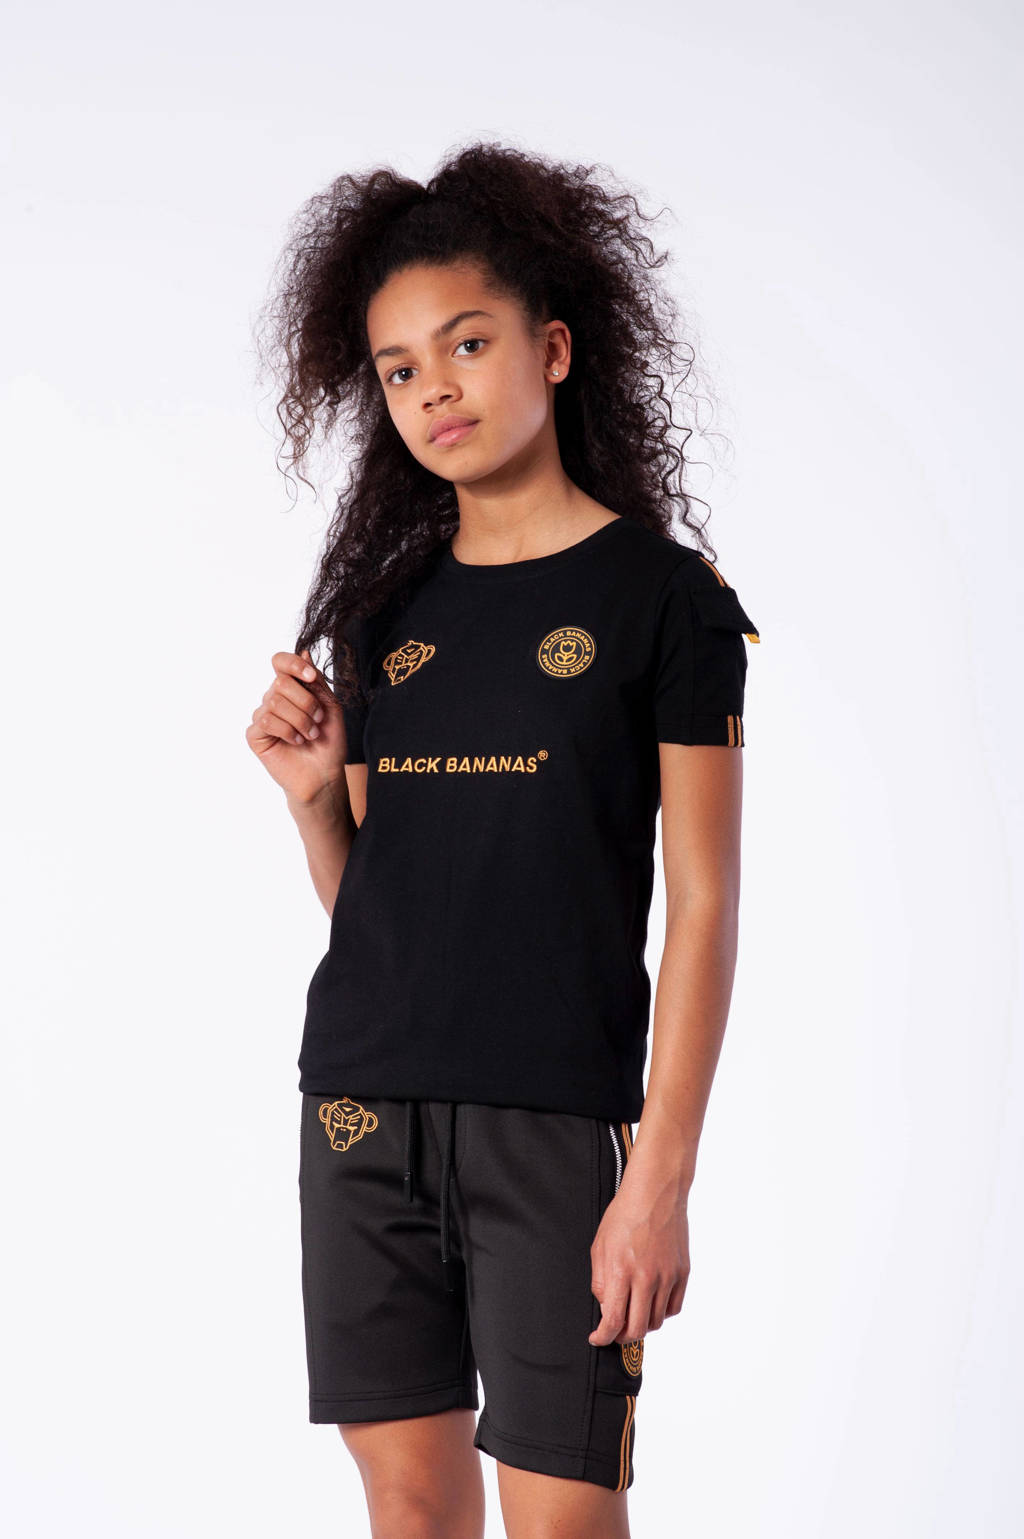 De vreemdeling haak Betsy Trotwood BLACK BANANAS unisex T-shirt zwart/oranje | wehkamp